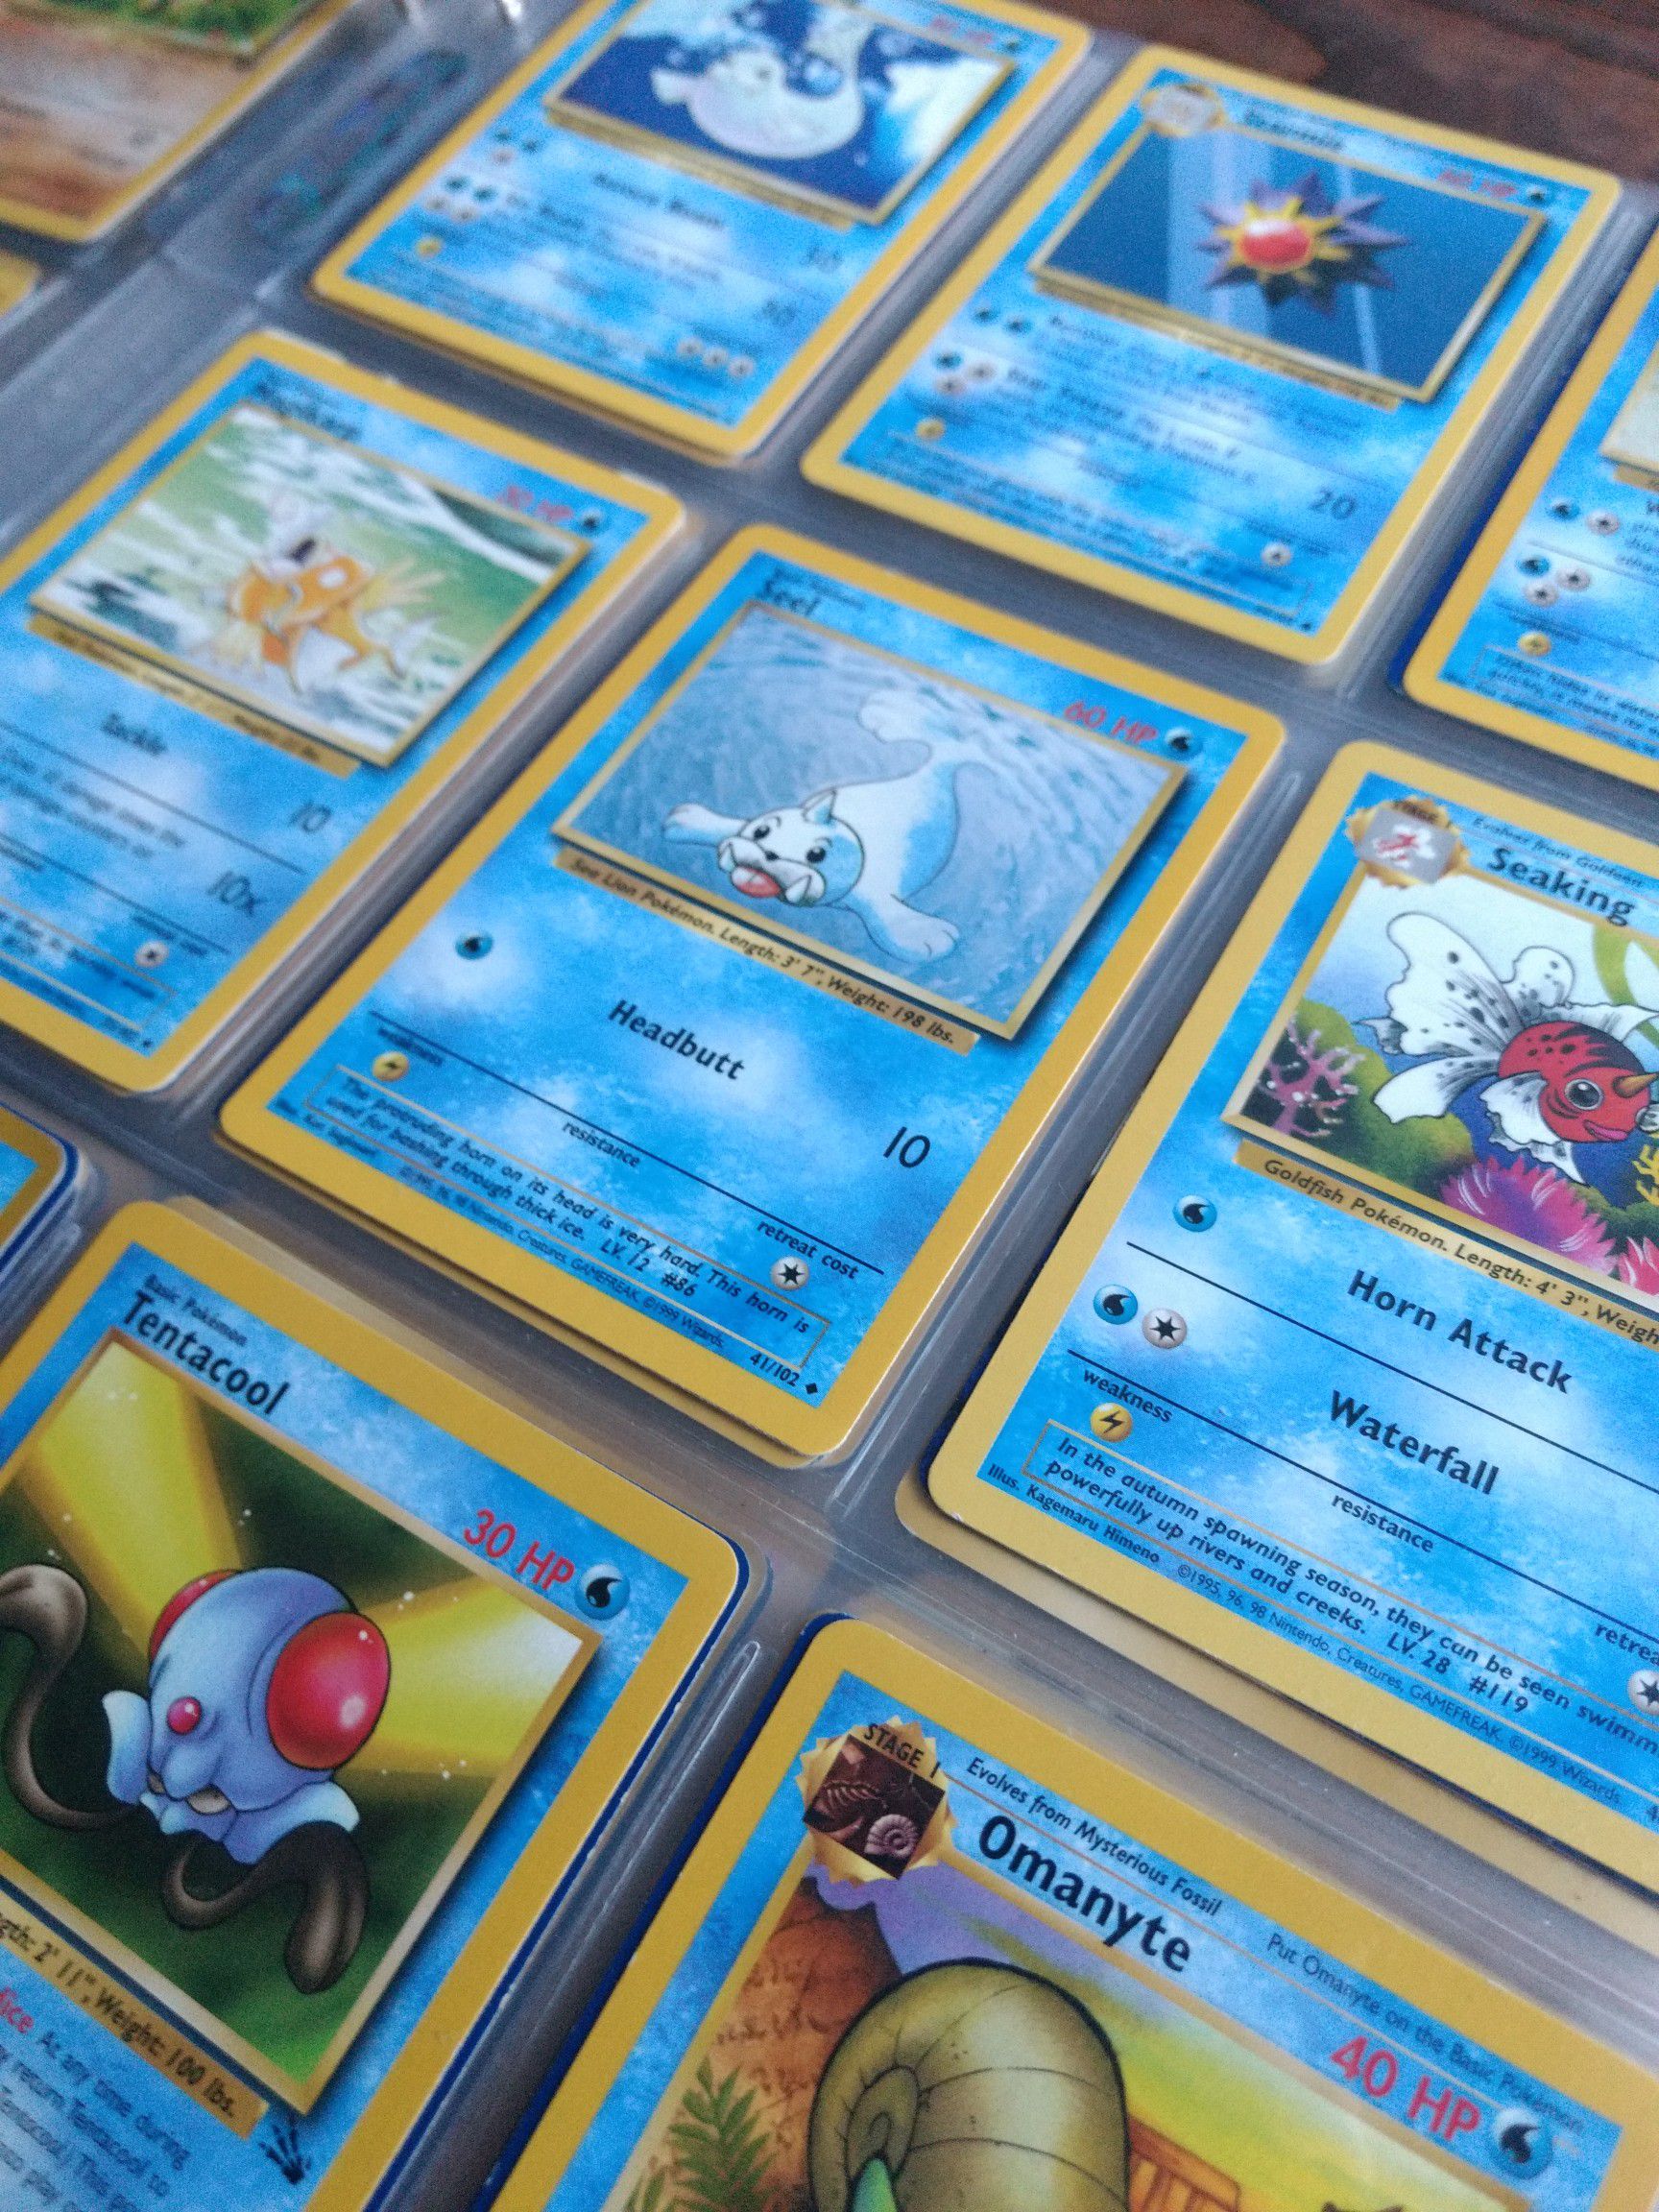 Approximately 130 Pokemon cards